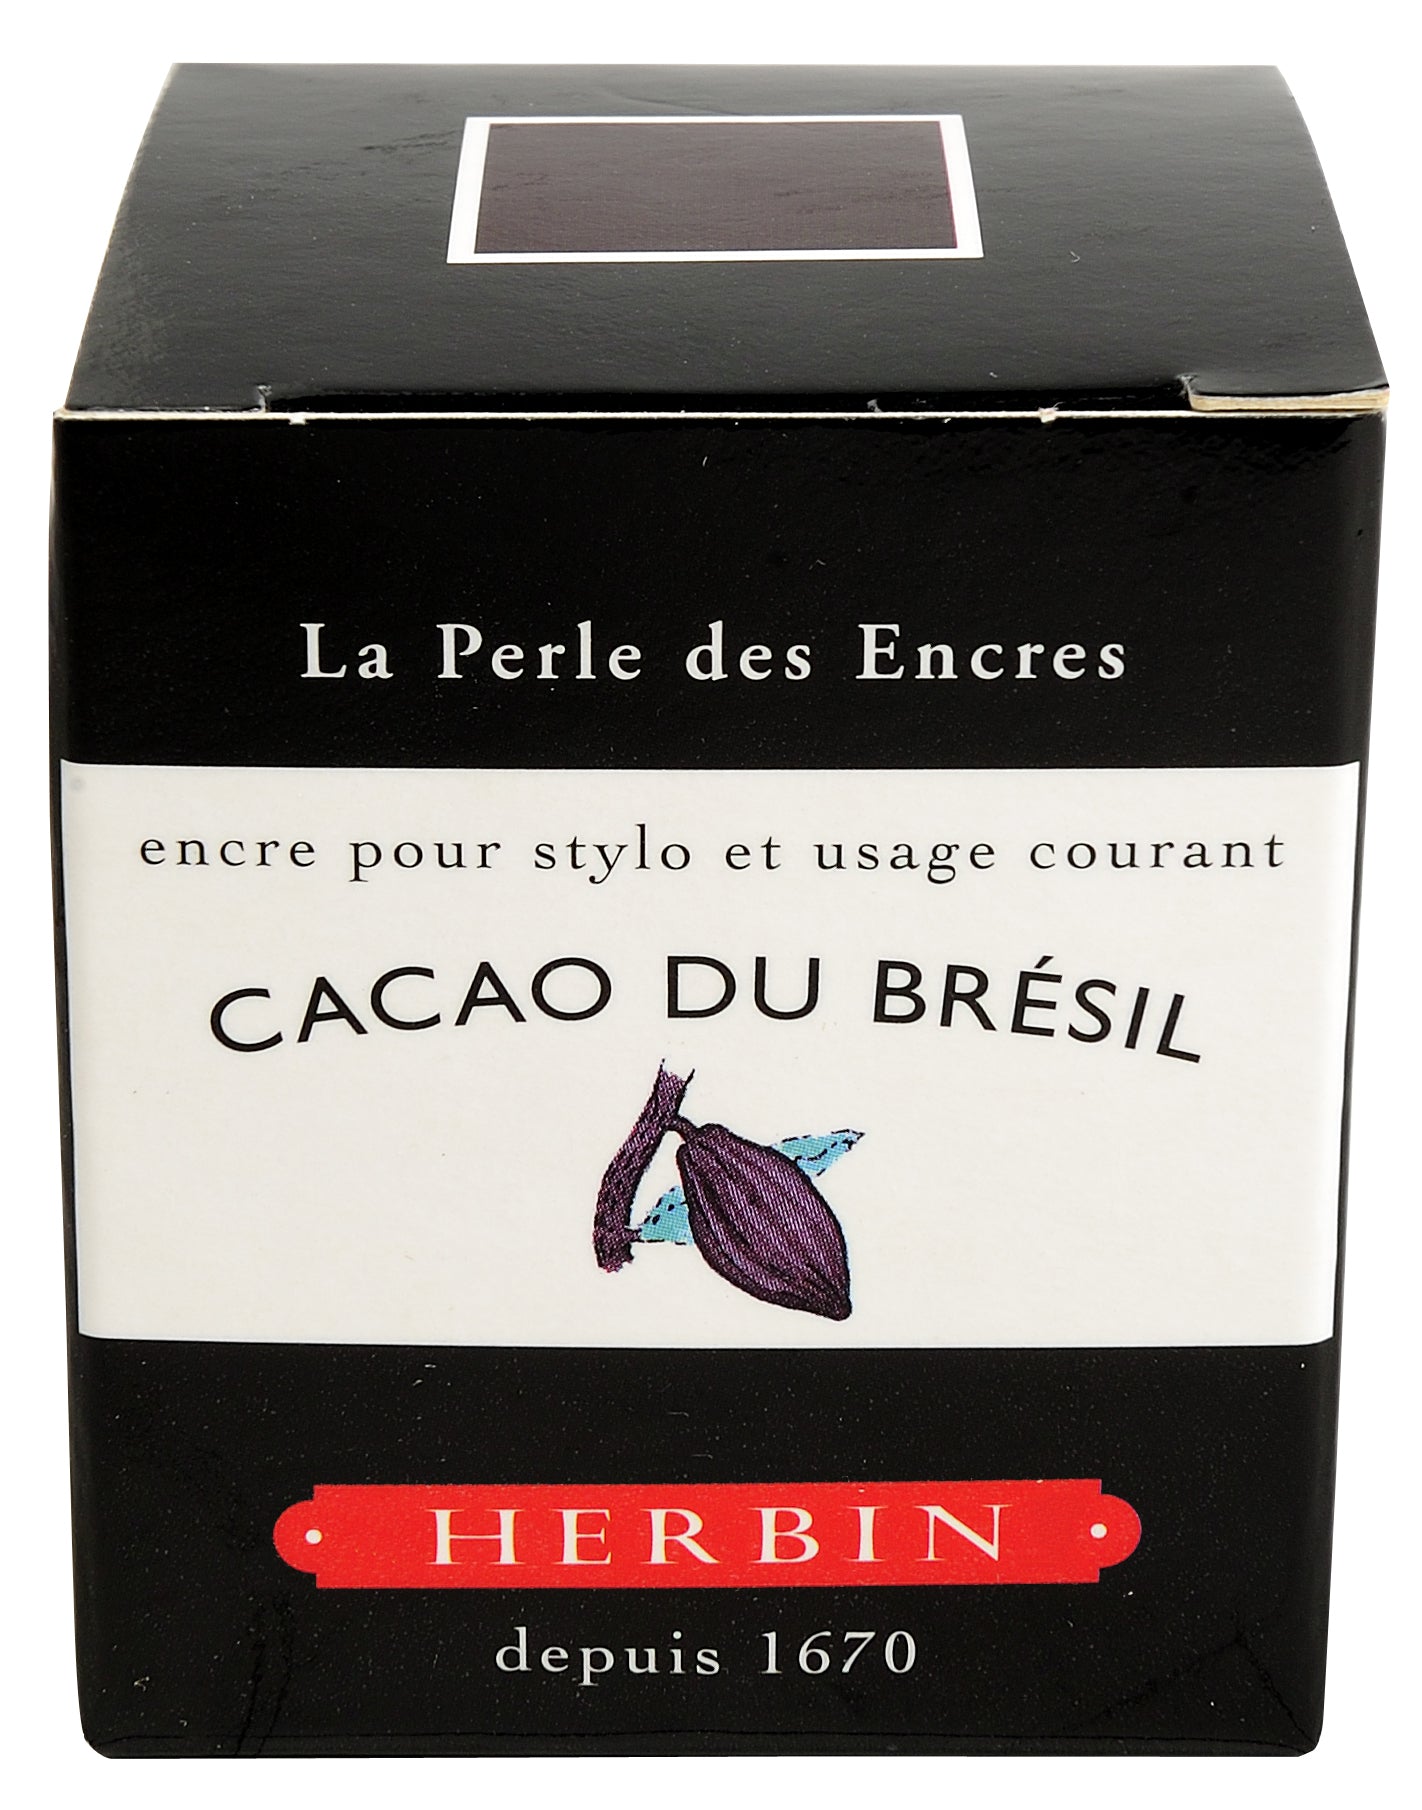 Herbin - Cacao du Bresil (kakaobraun), 30 ml